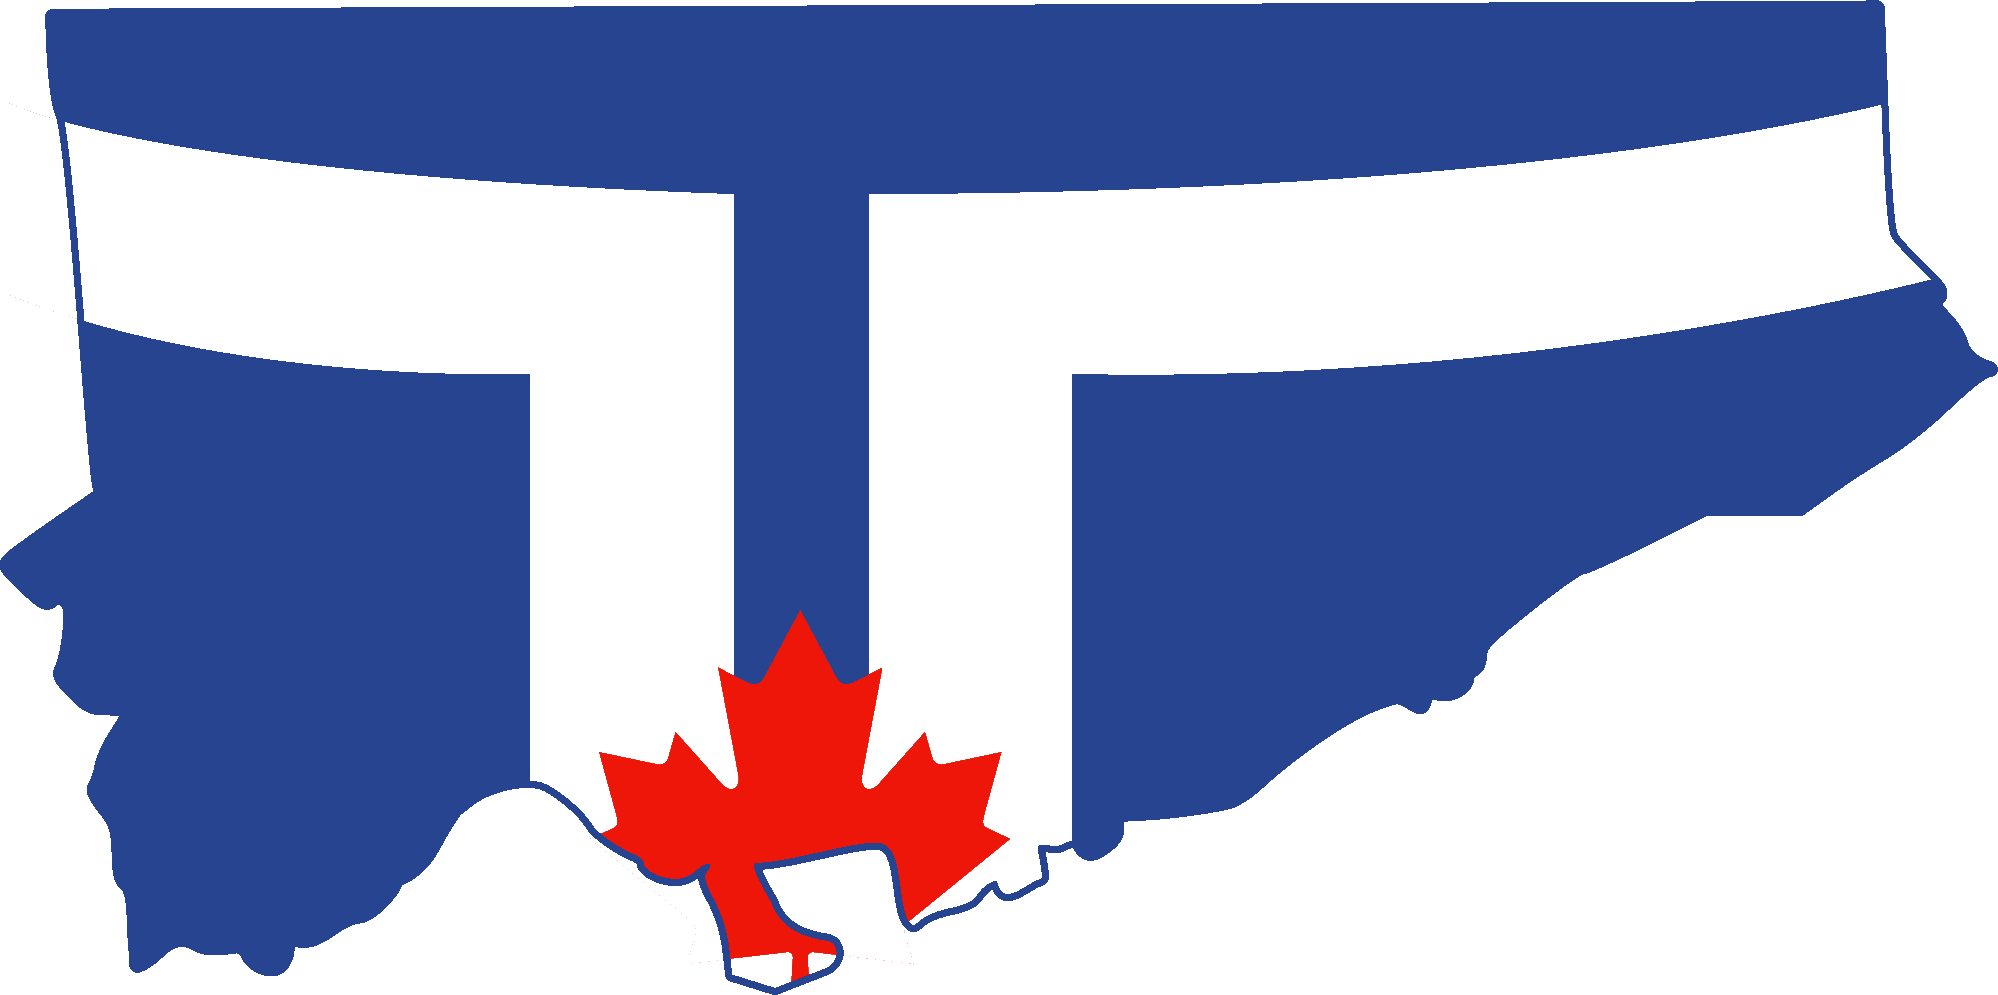 08, 8 September 2012 - Toronto Map And Flag (1998x995)